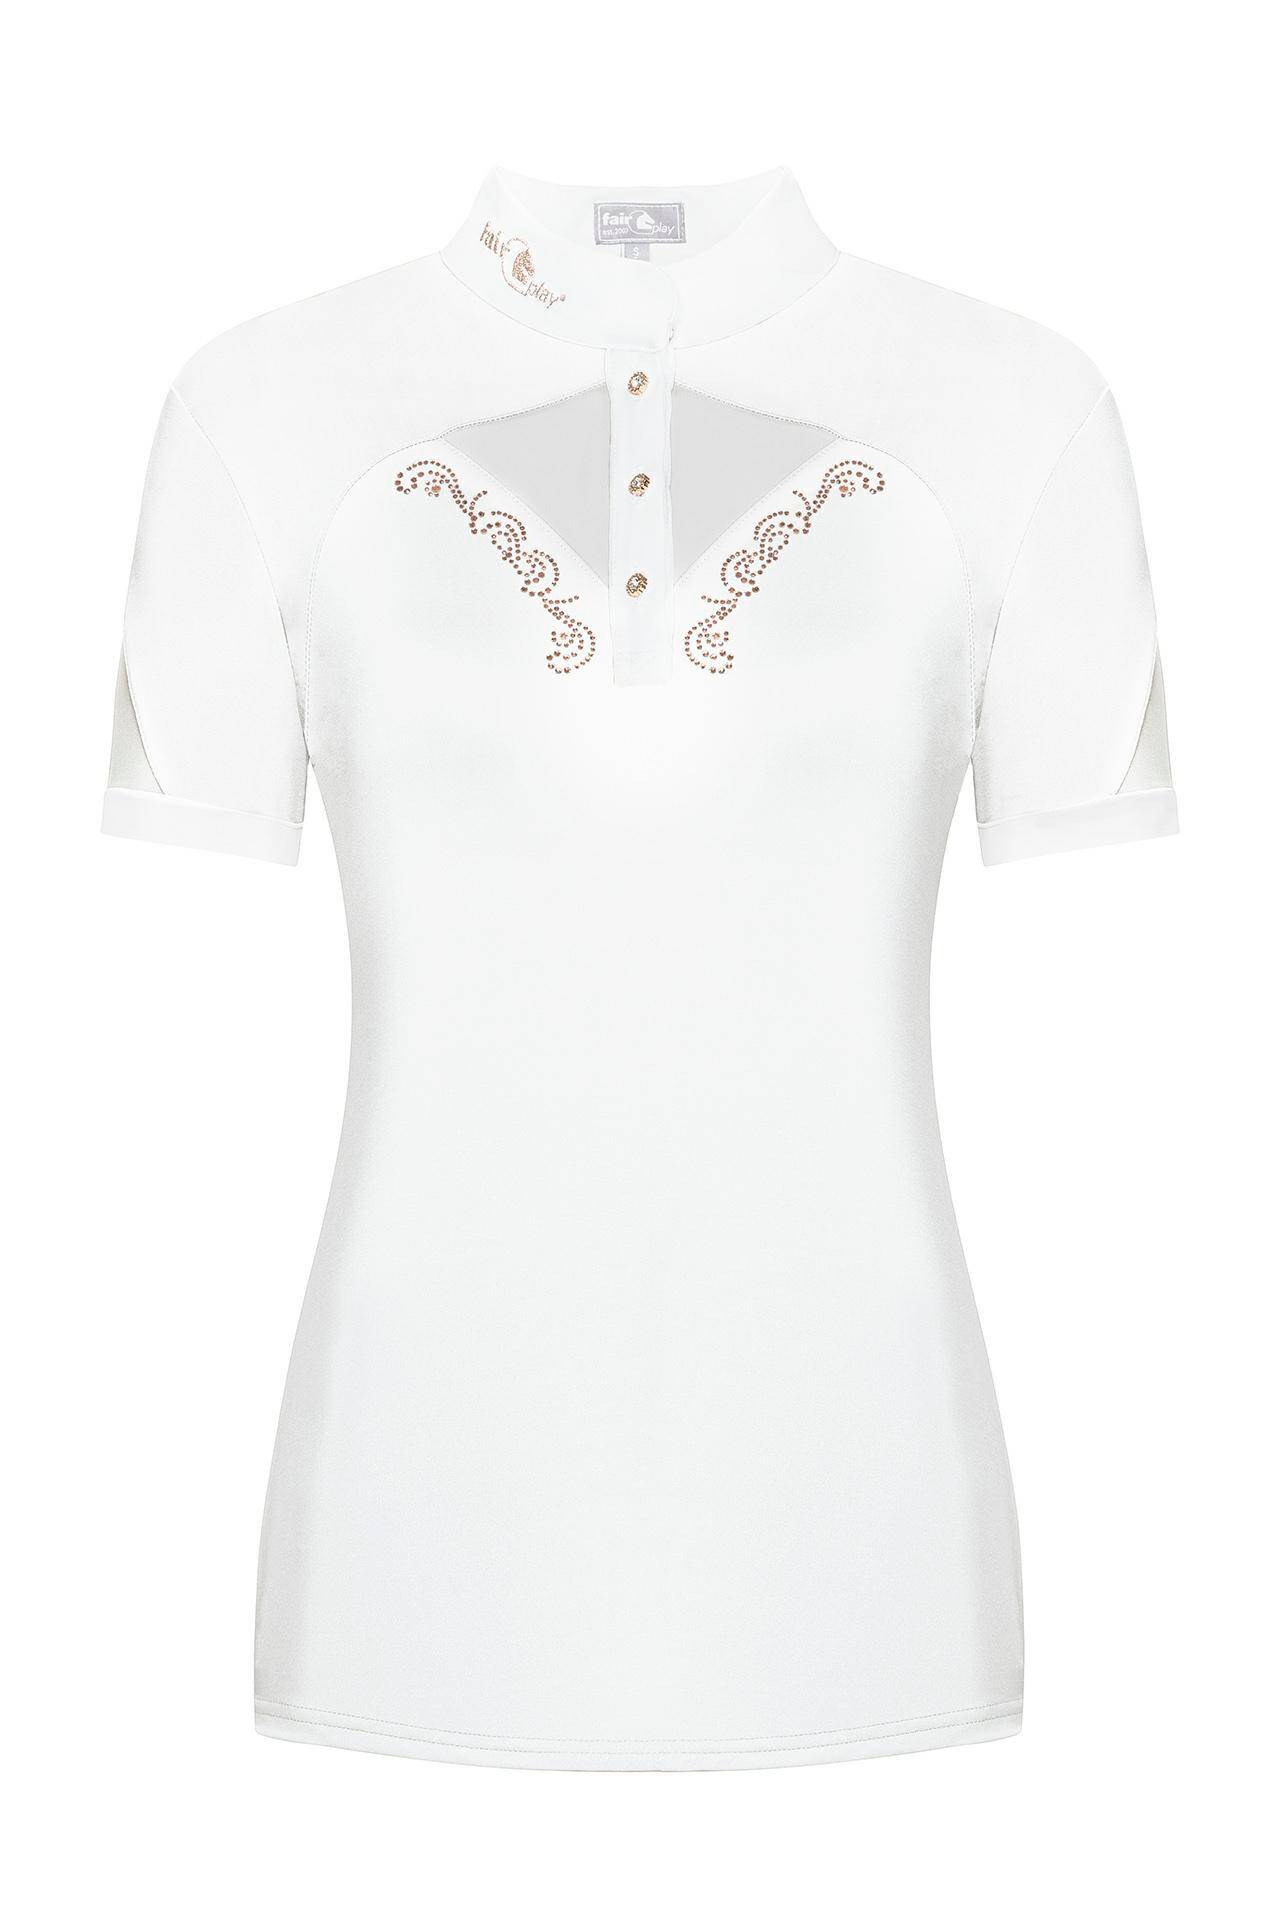 Koszulka FP CATHRINE ROSEGOLD biały 42